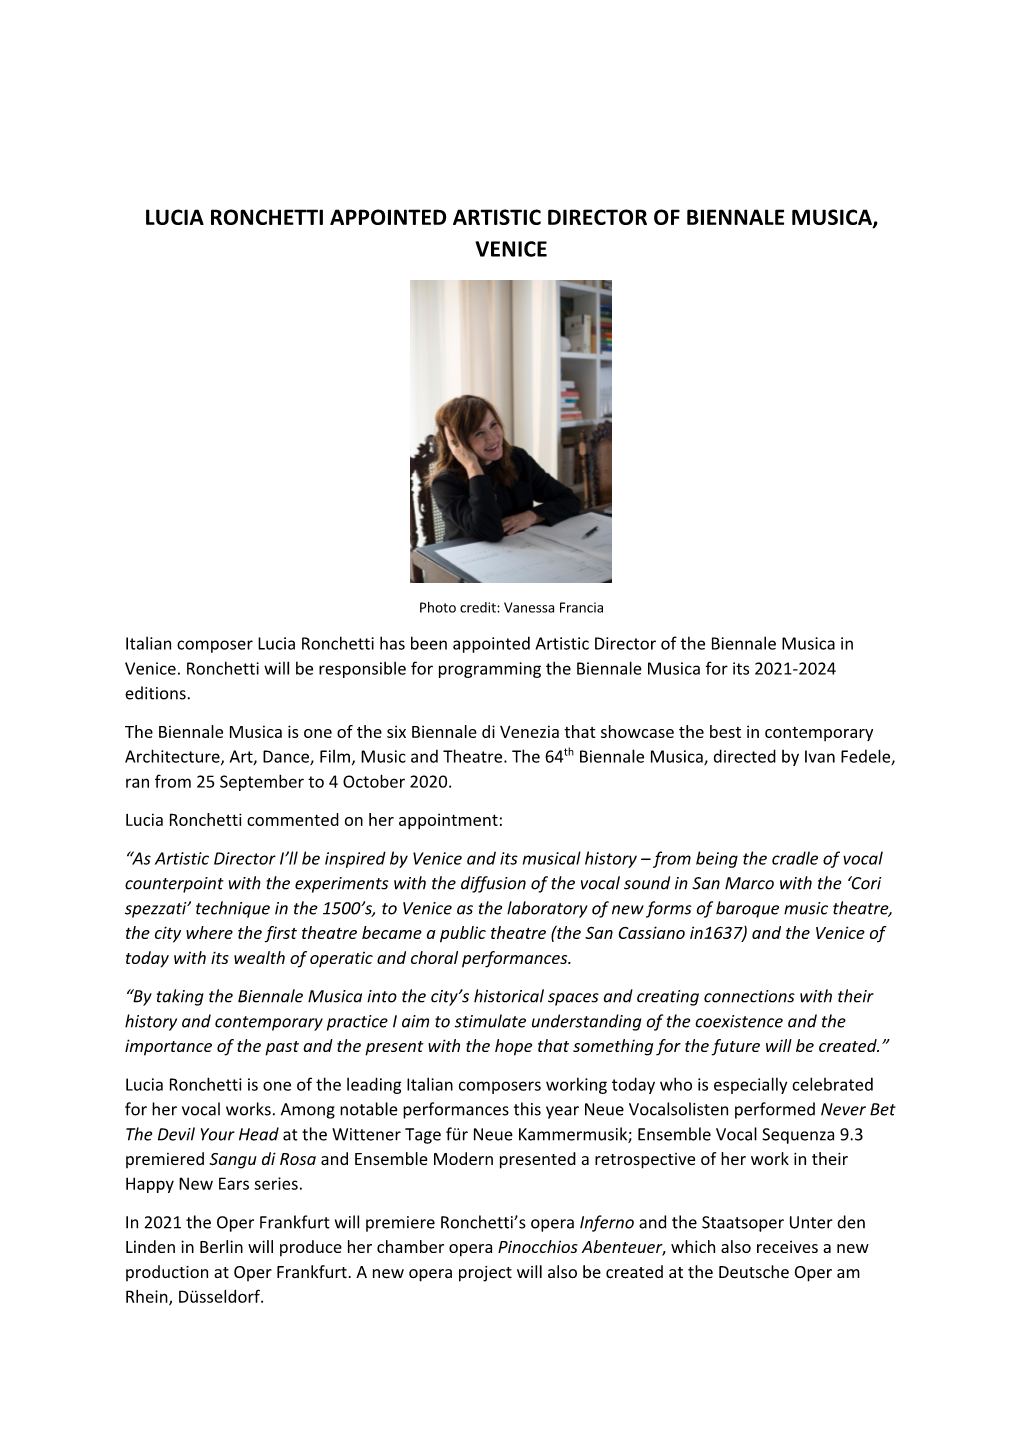 Lucia Ronchetti Appointed Artistic Director of Biennale Musica, Venice